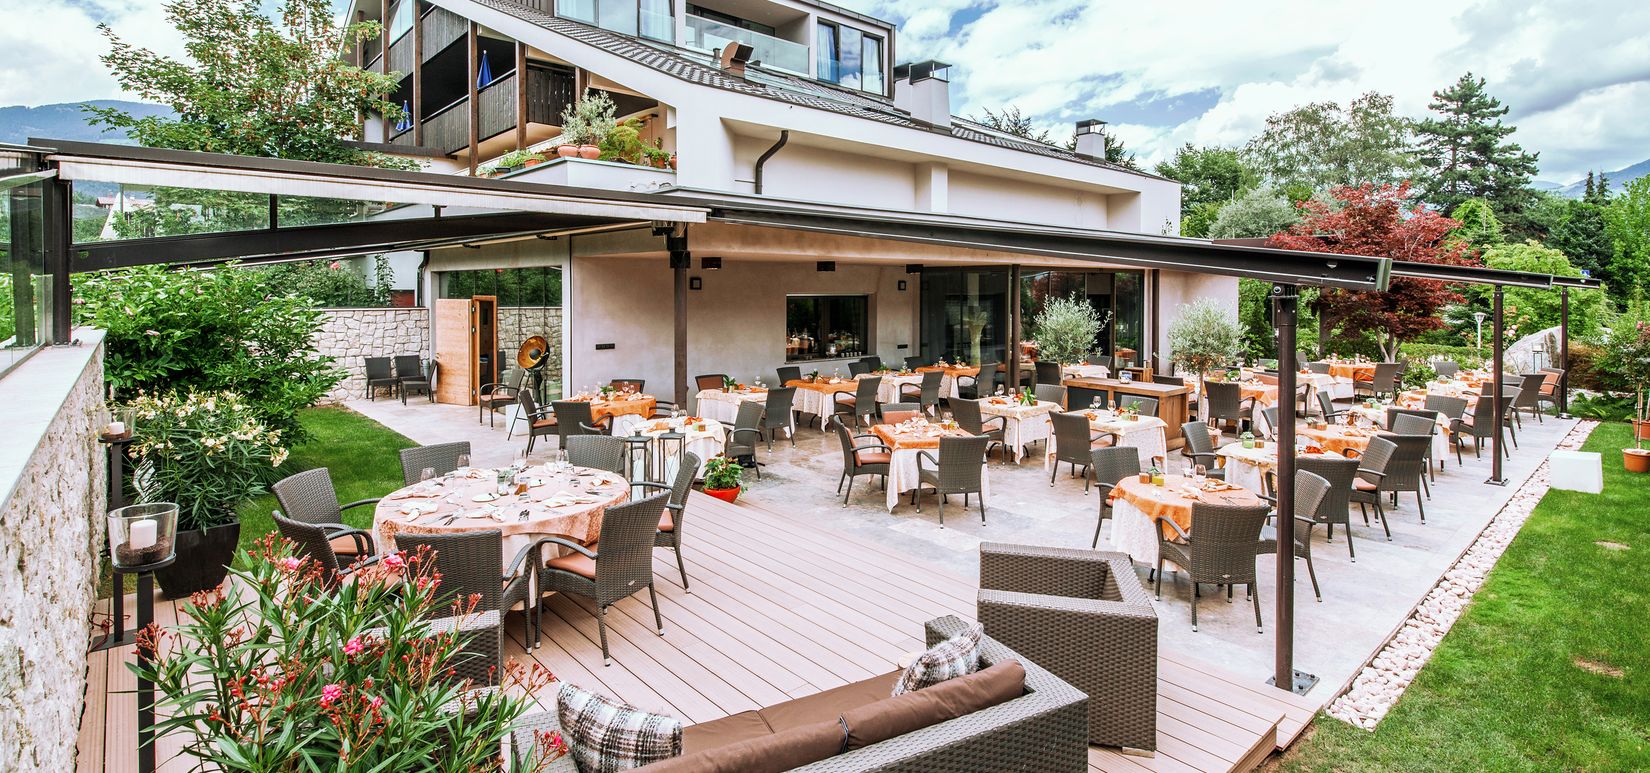 ****Hotel Kirchsteiger, Foiana, panorama terrace